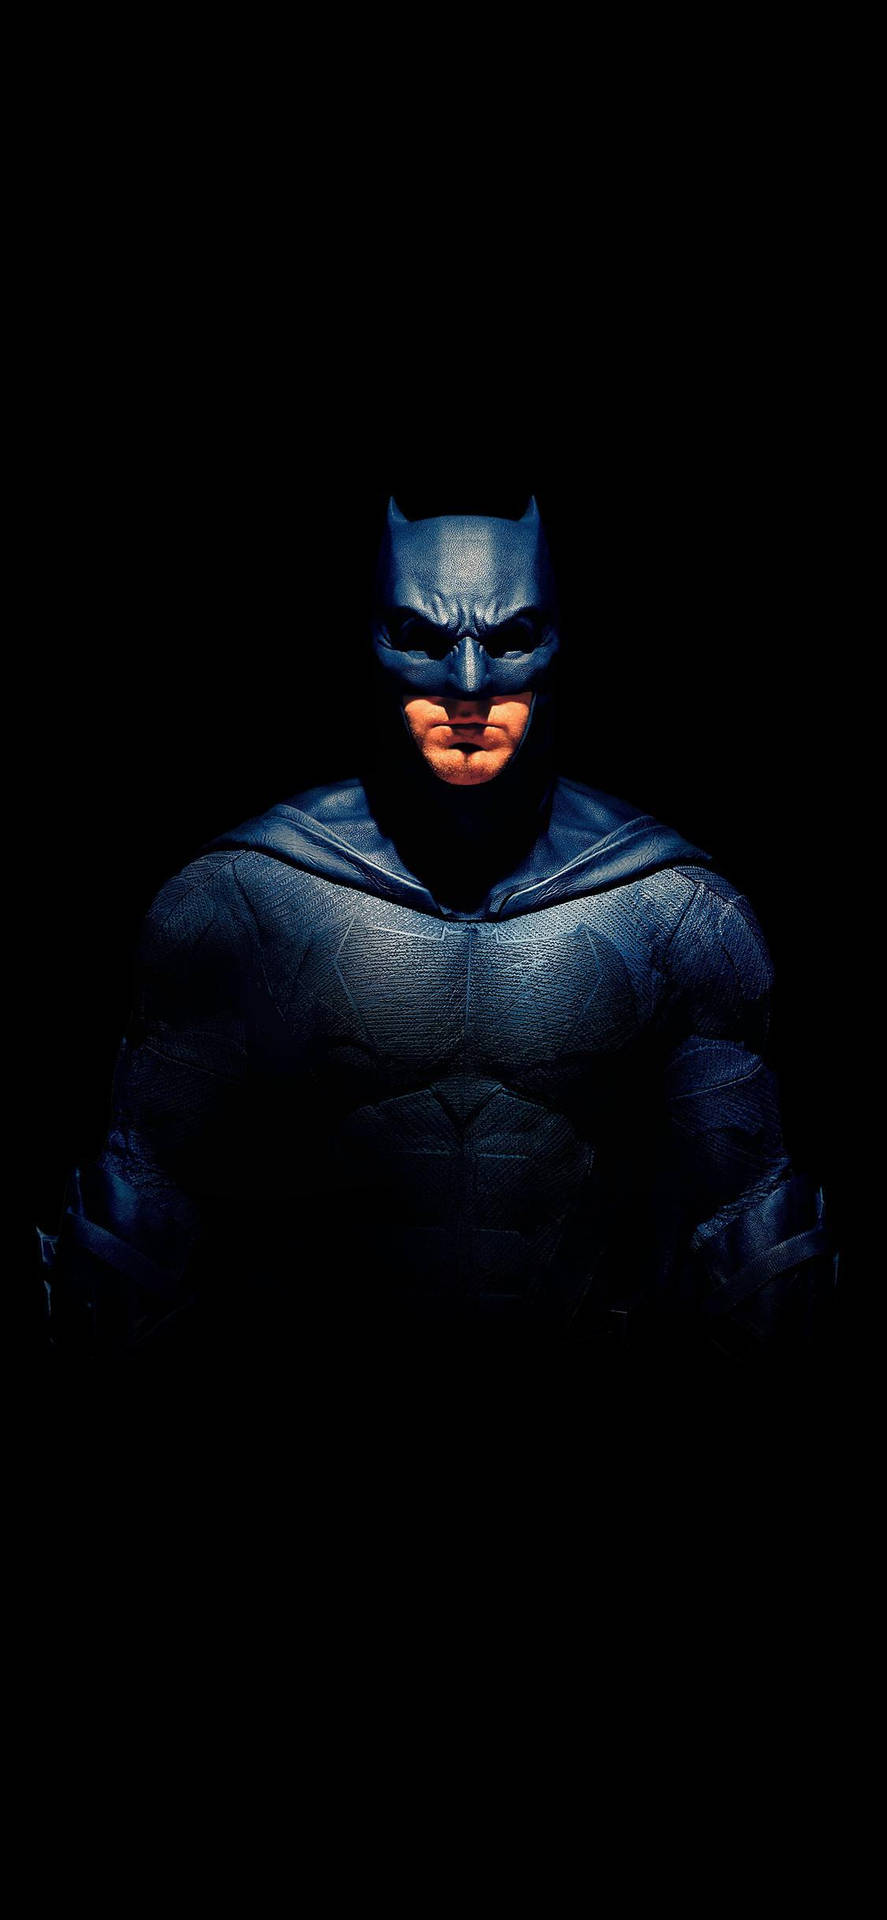 Justiceleague Batman Mörk Iphone Wallpaper